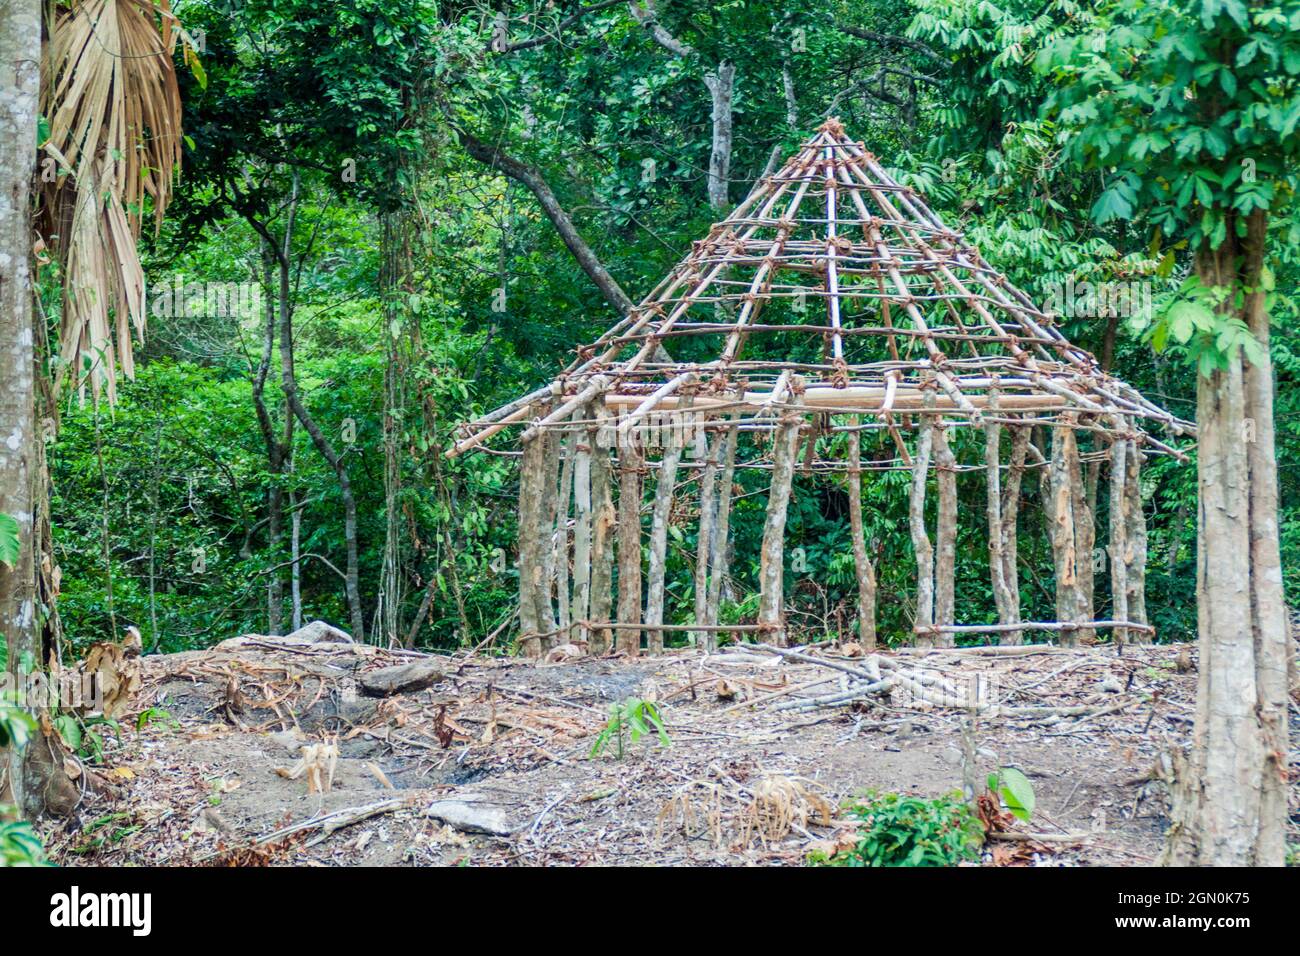 Im Tayrona National Park, Kolumbien, wird derzeit ein traditionelles rustikales Haus indigener Kogi-Völker gebaut Stockfoto